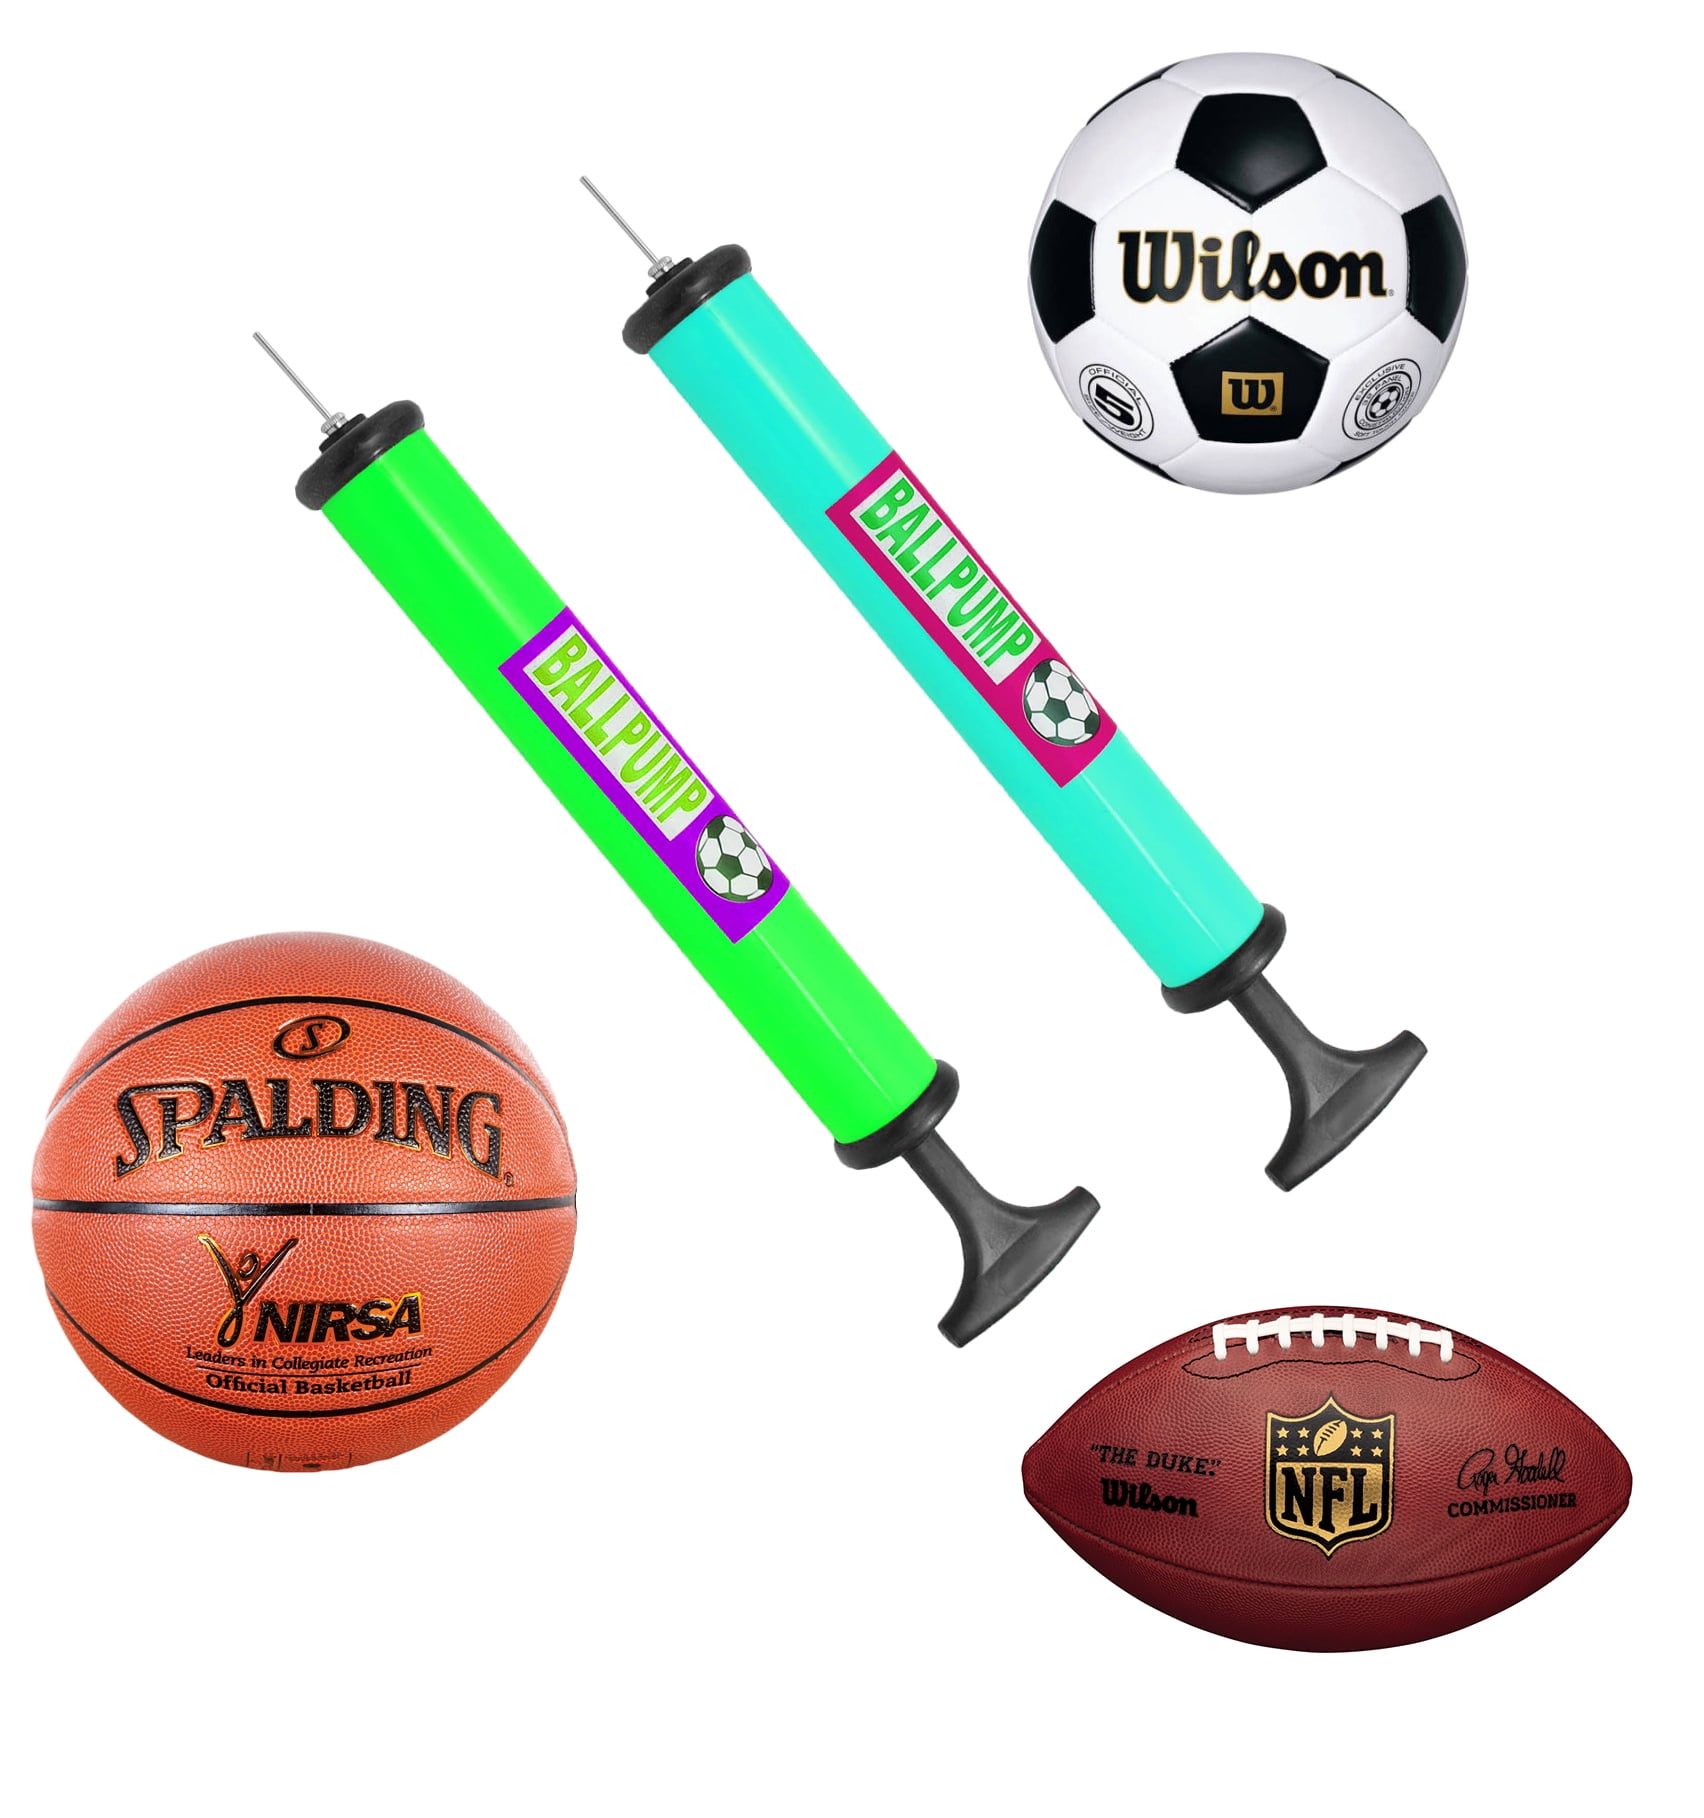 30pcs Football Basketball Ball Pump Needle Air Inflate Pin For Sports Balls